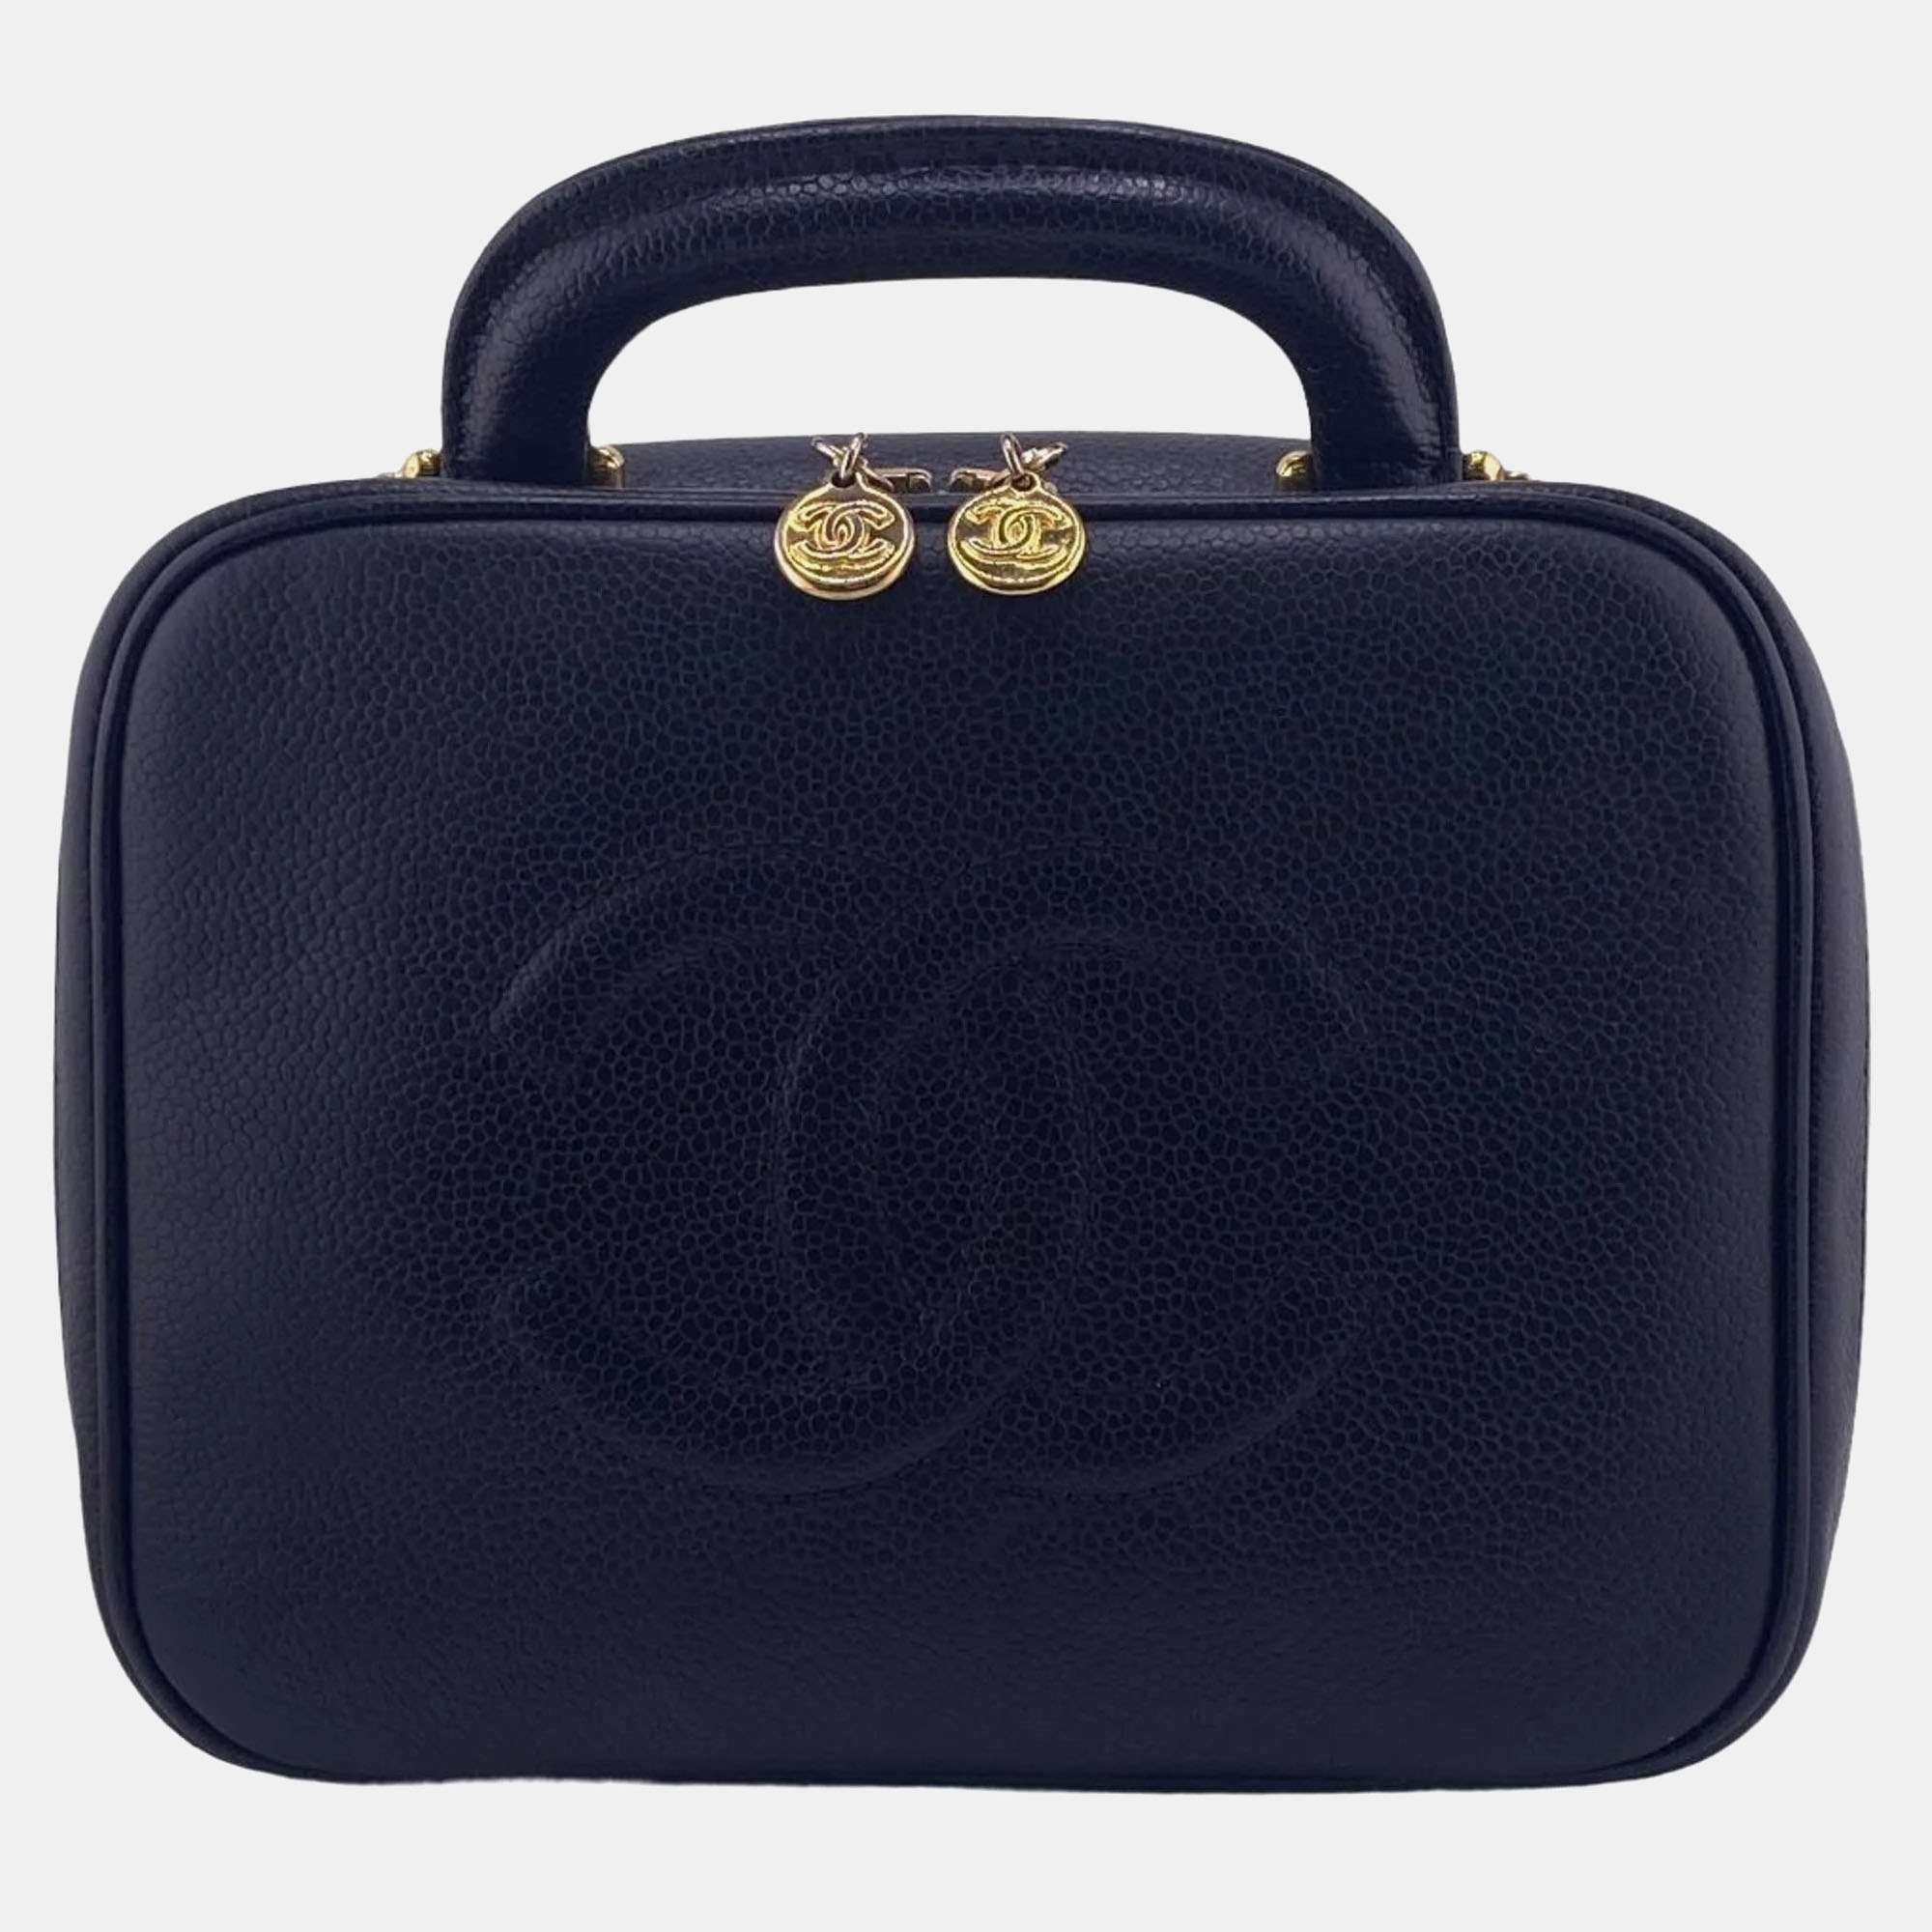 Chanel black caviar leather medium vanity case clutch